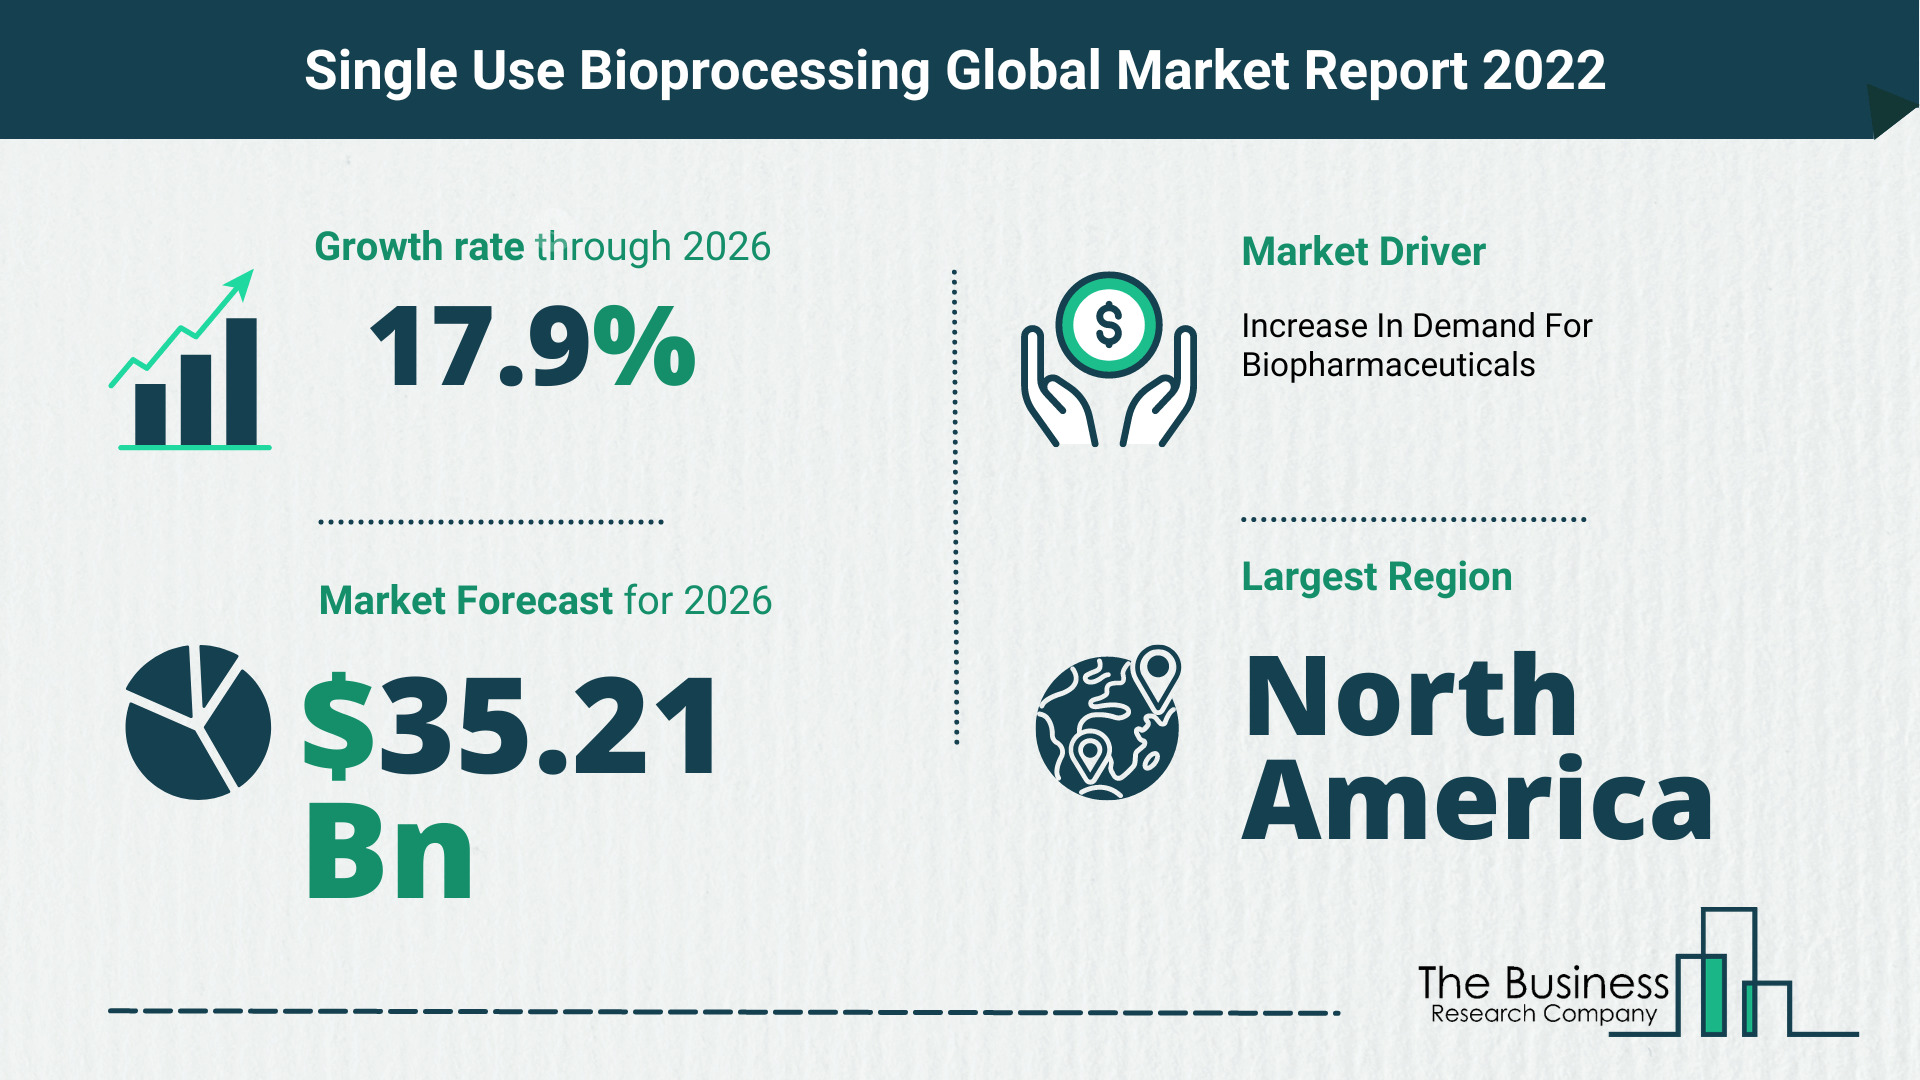 Global Single Use Bioprocessing Market